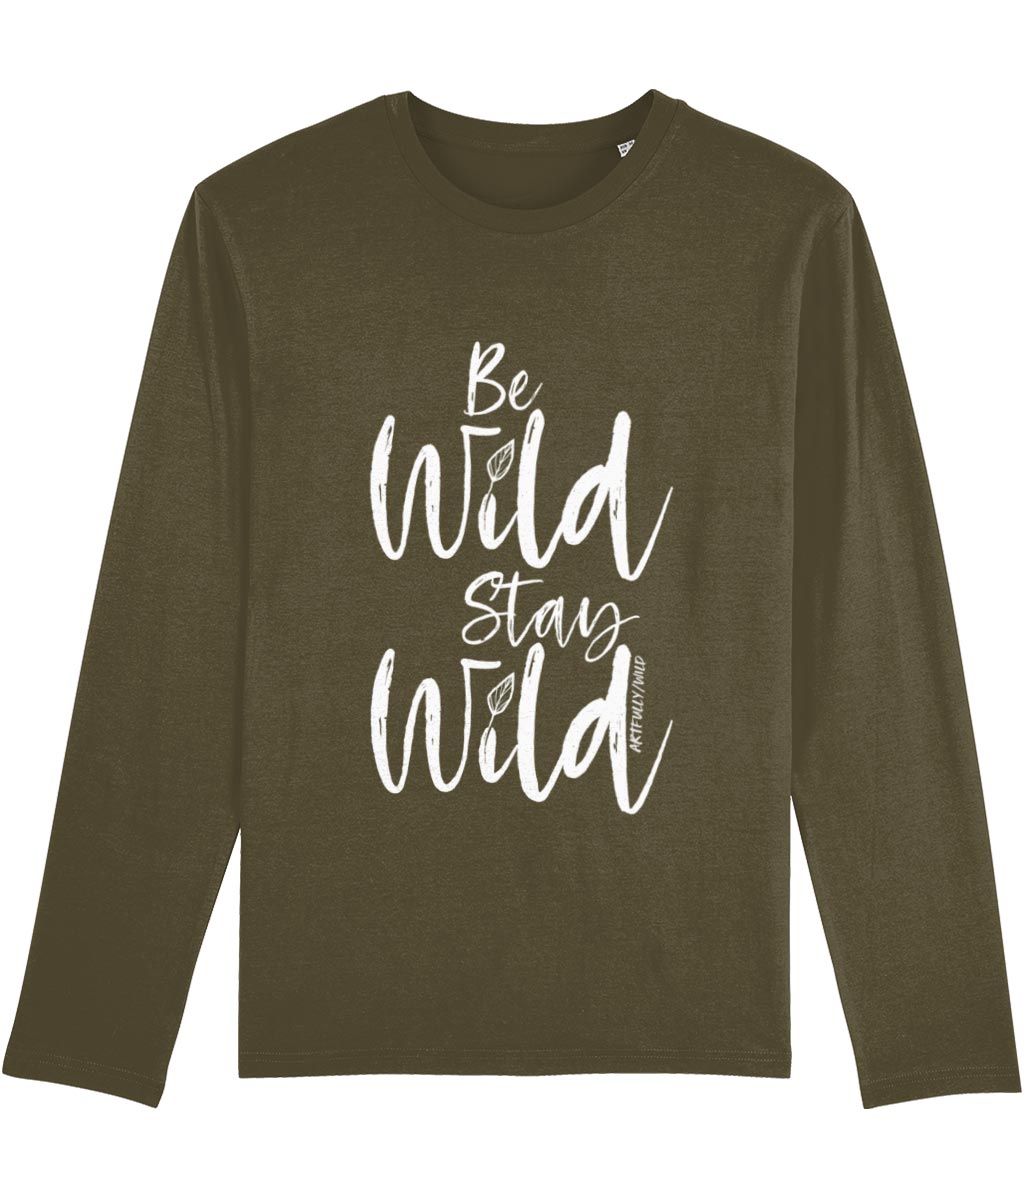 ‘BE WILD STAY WILD’ Men's British Khaki Long-Sleeved T-Shirt. Certified organic cotton. White slogan print with water-based inks. Original Design by Artfully Wild.